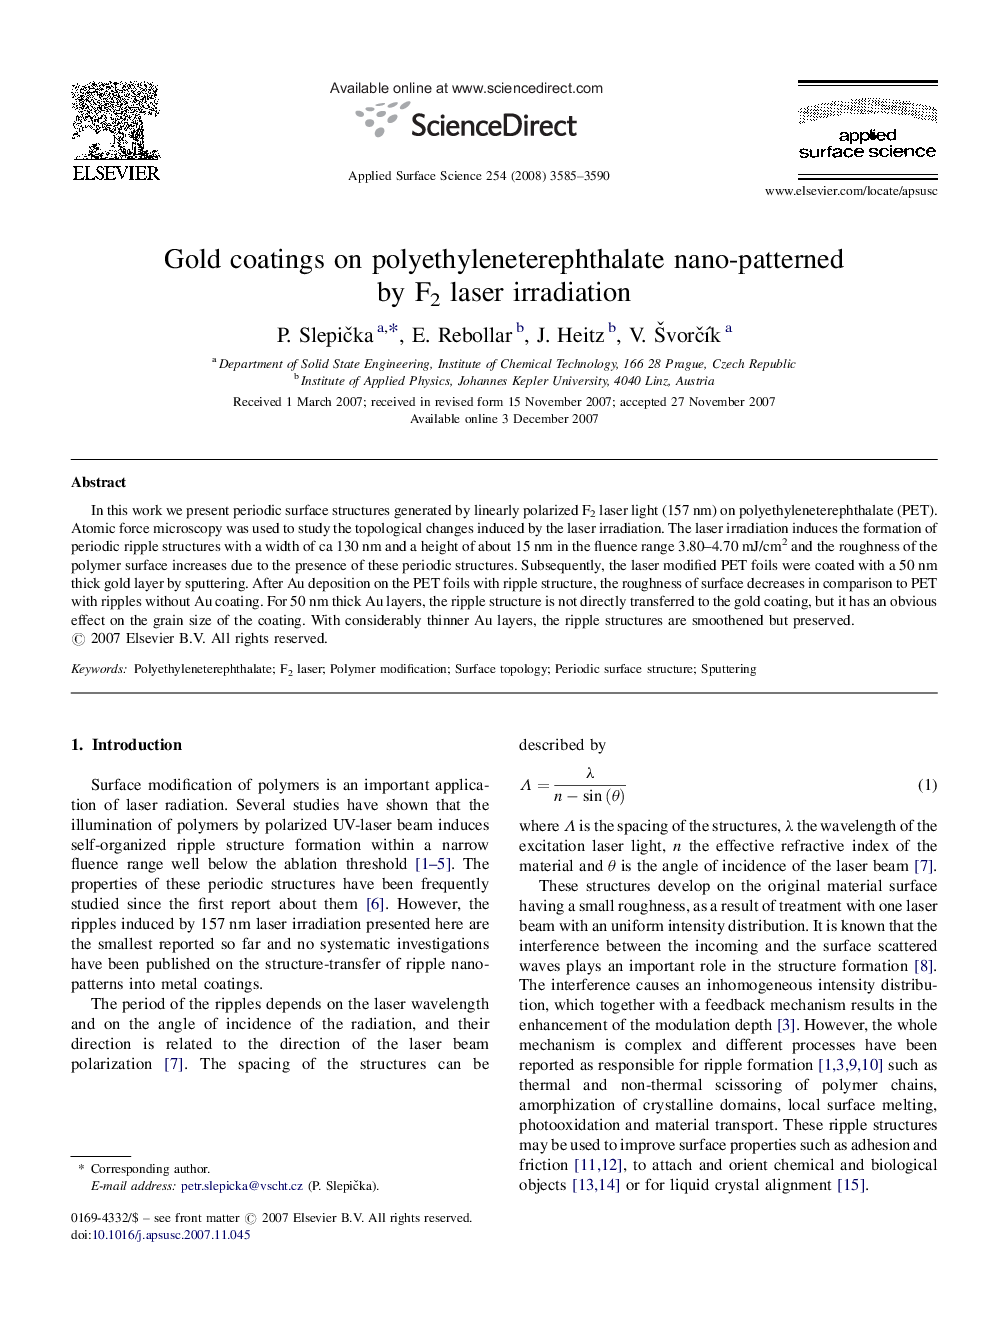 Gold coatings on polyethyleneterephthalate nano-patterned by F2 laser irradiation